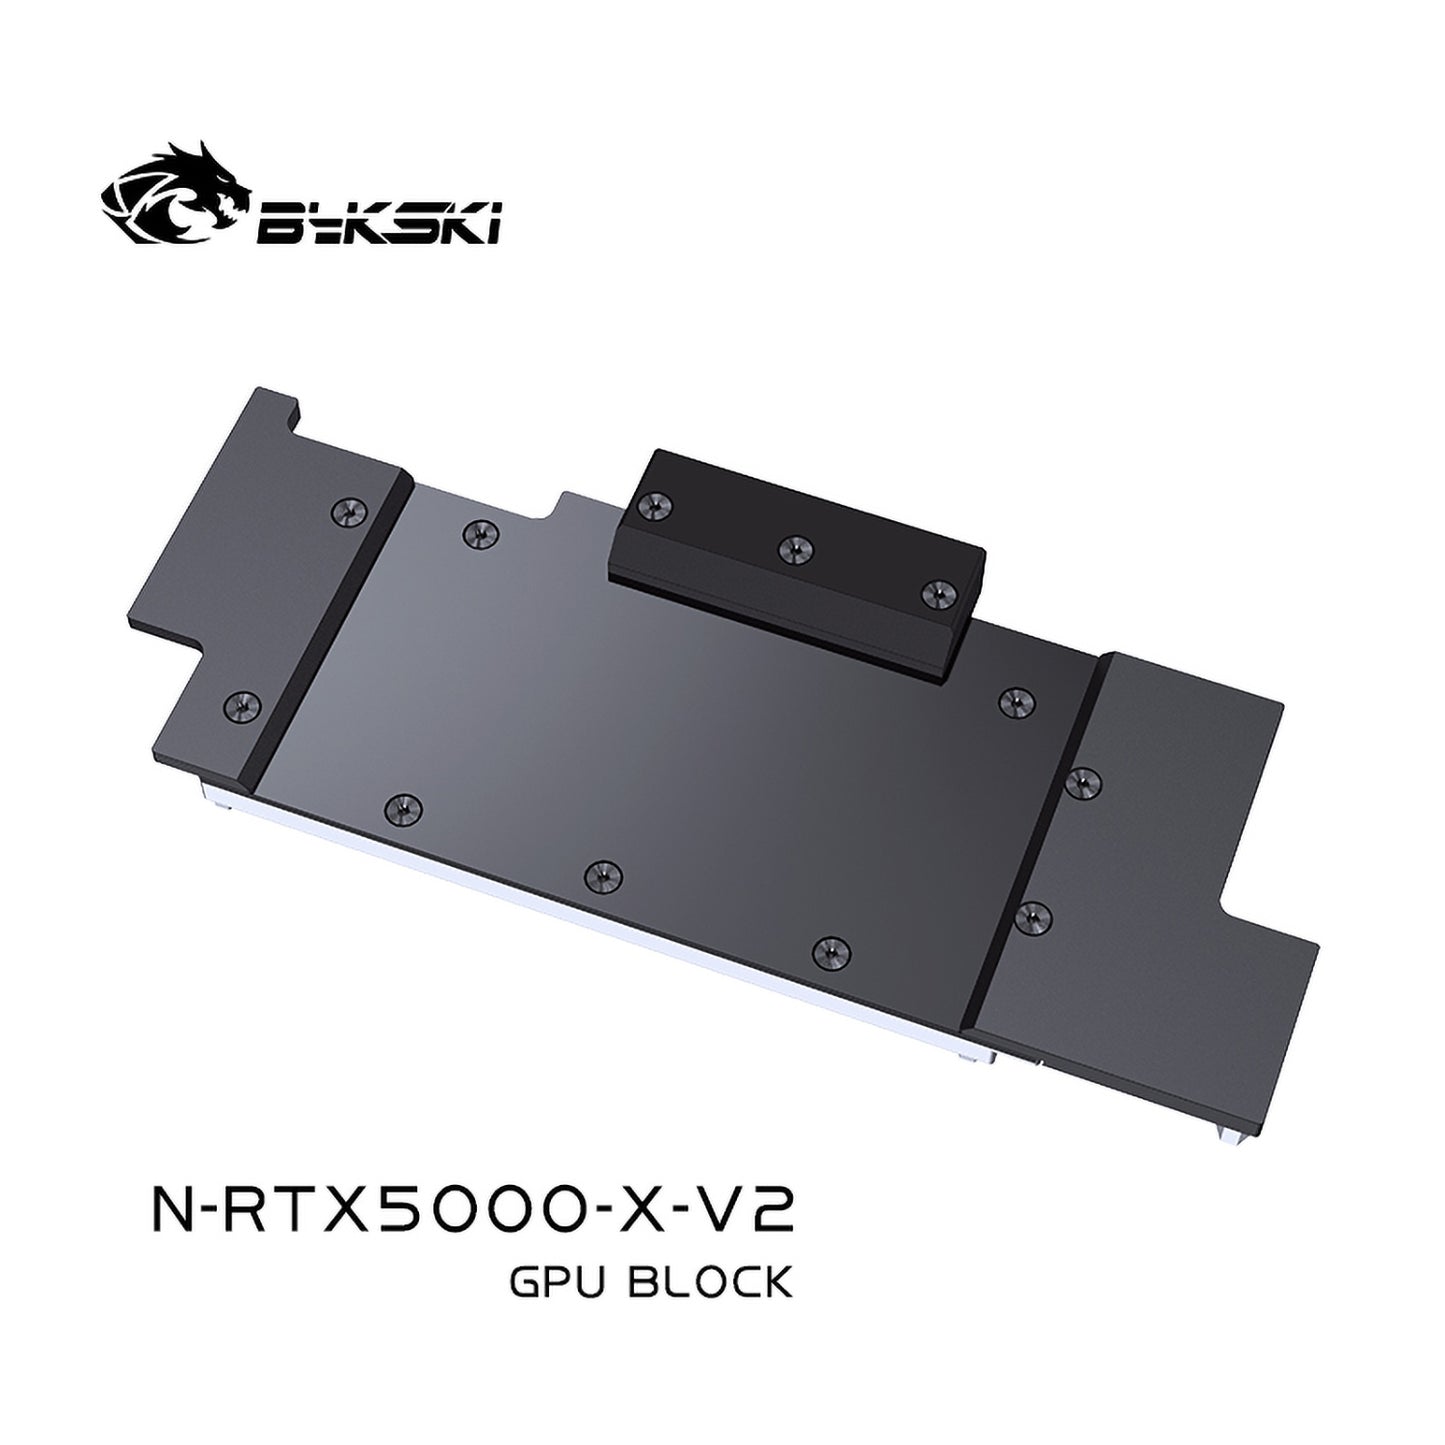 Bykski GPU Block For Leadtek RTX 5000, High Heat Resistance Material POM + Full Metal Construction, Full Cover GPU Water Cooling Cooler Radiator Block N-RTX5000-X-V2